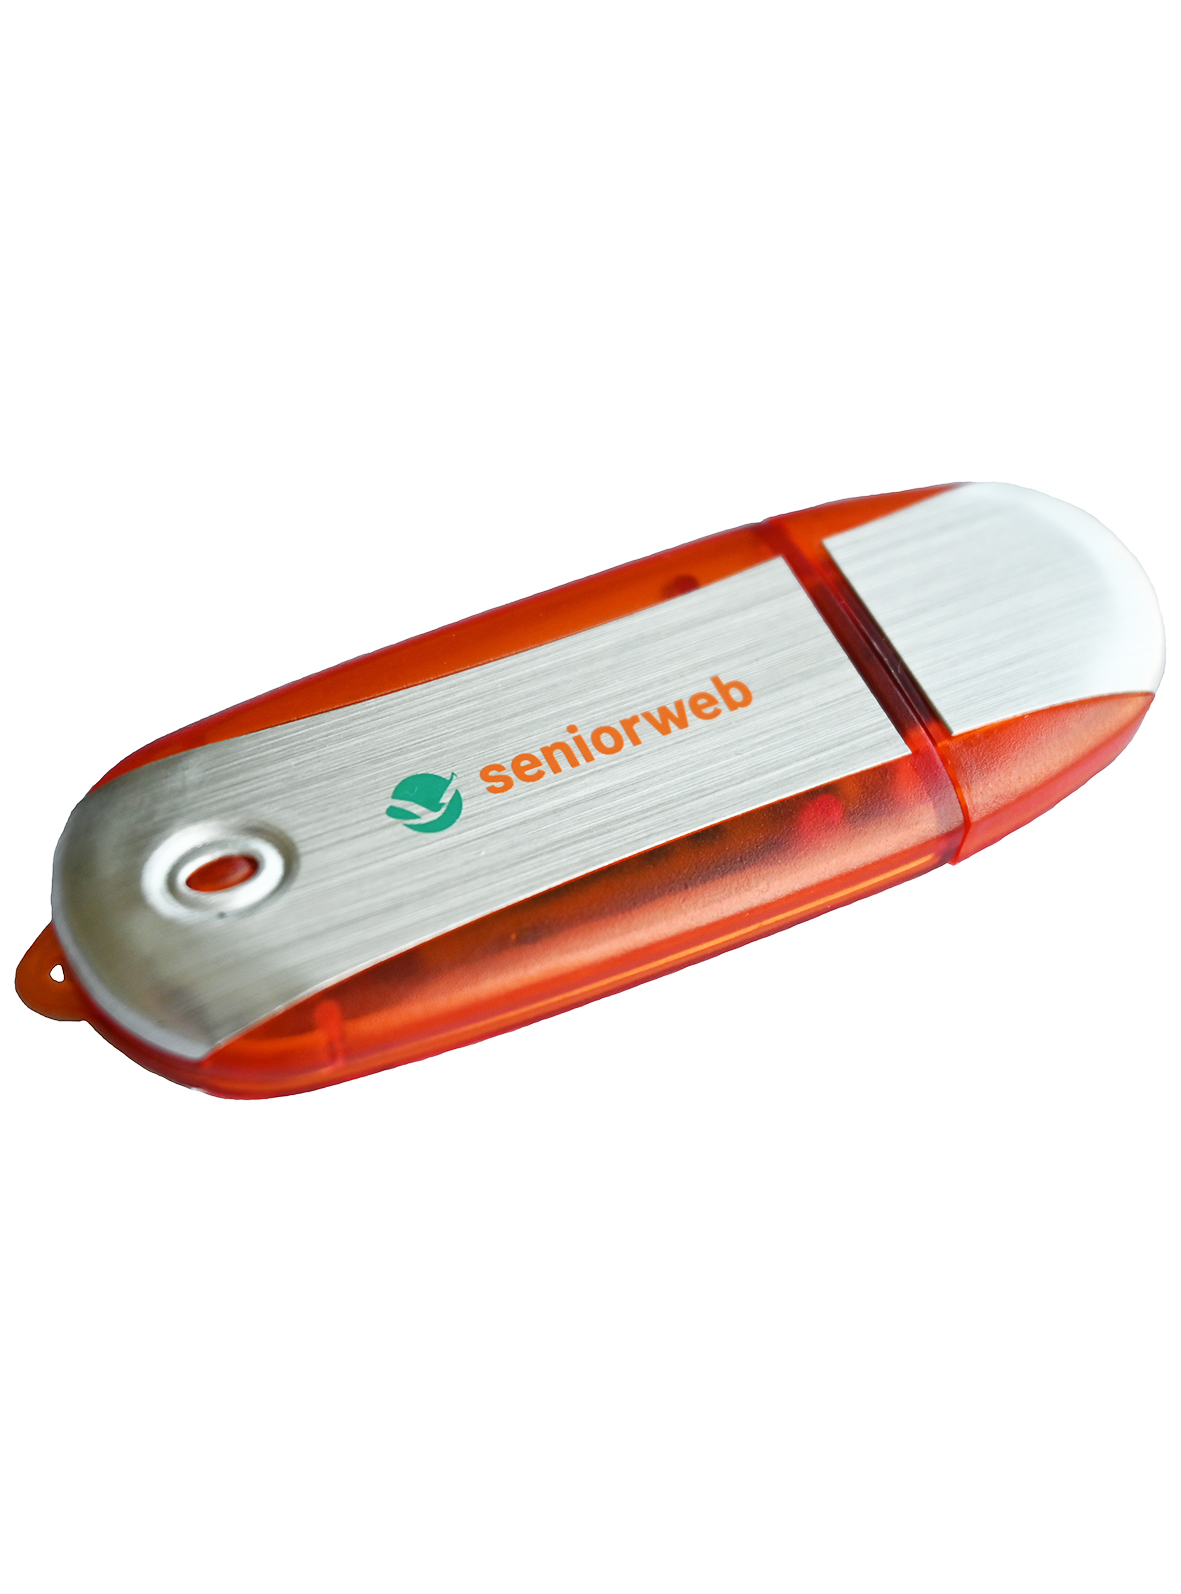 SeniorWeb Usb-stick 64 GB